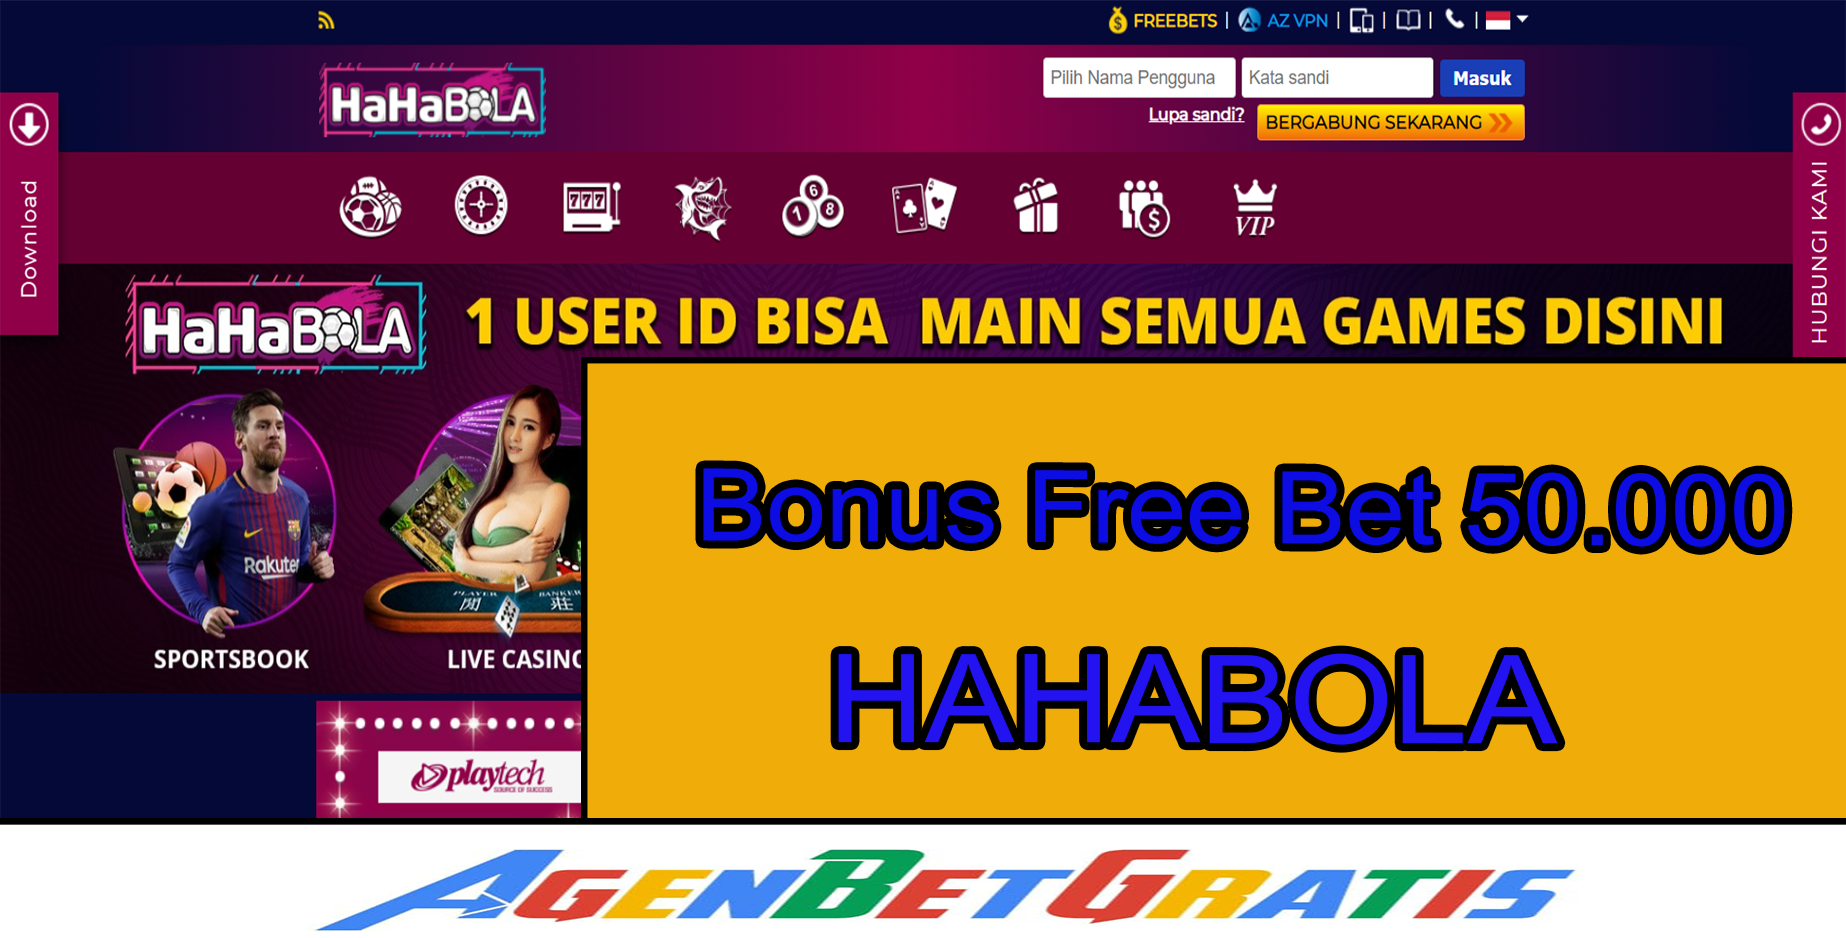 HAHABOLA - Bonus FreeBet 50.000